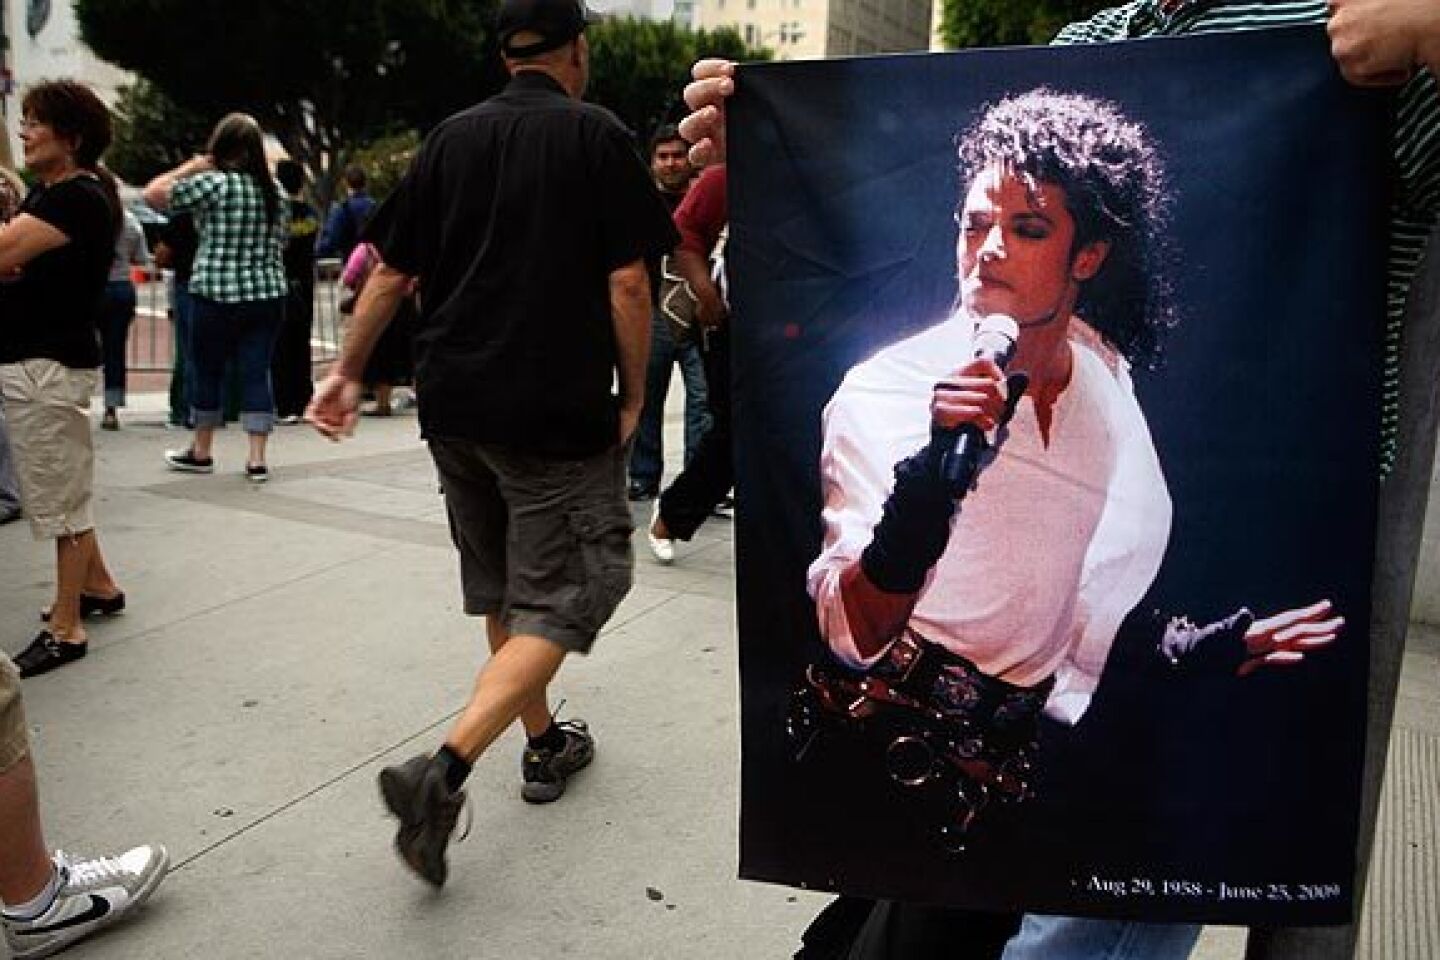 Michael Jackson Memorial in Los Angeles